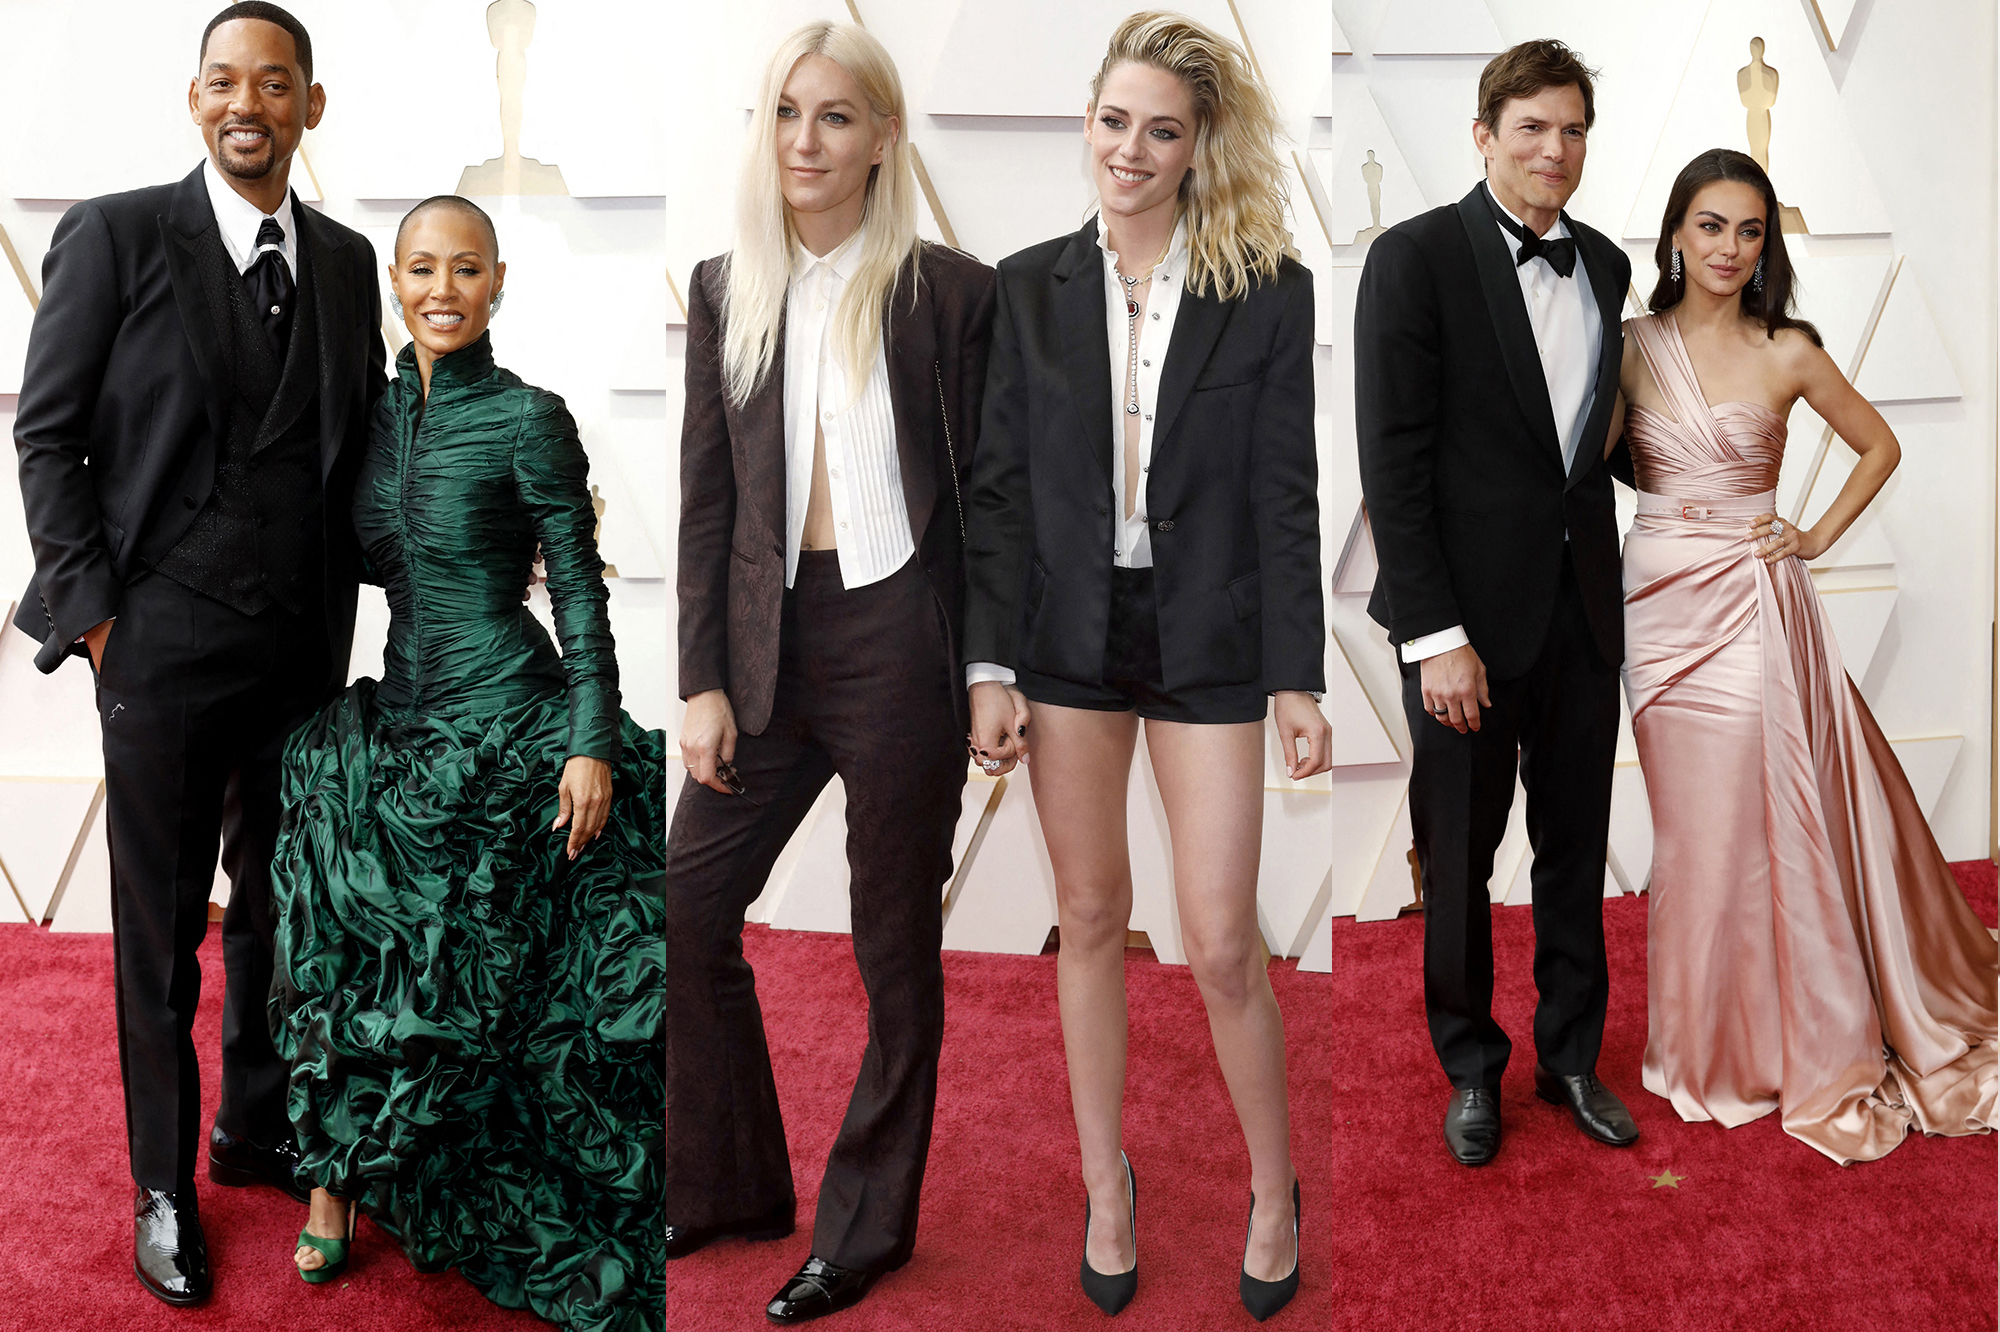 Jada Pinkett, Will Smith, Mila Kunis and Ashton Kutcher...star couples at the Oscars

